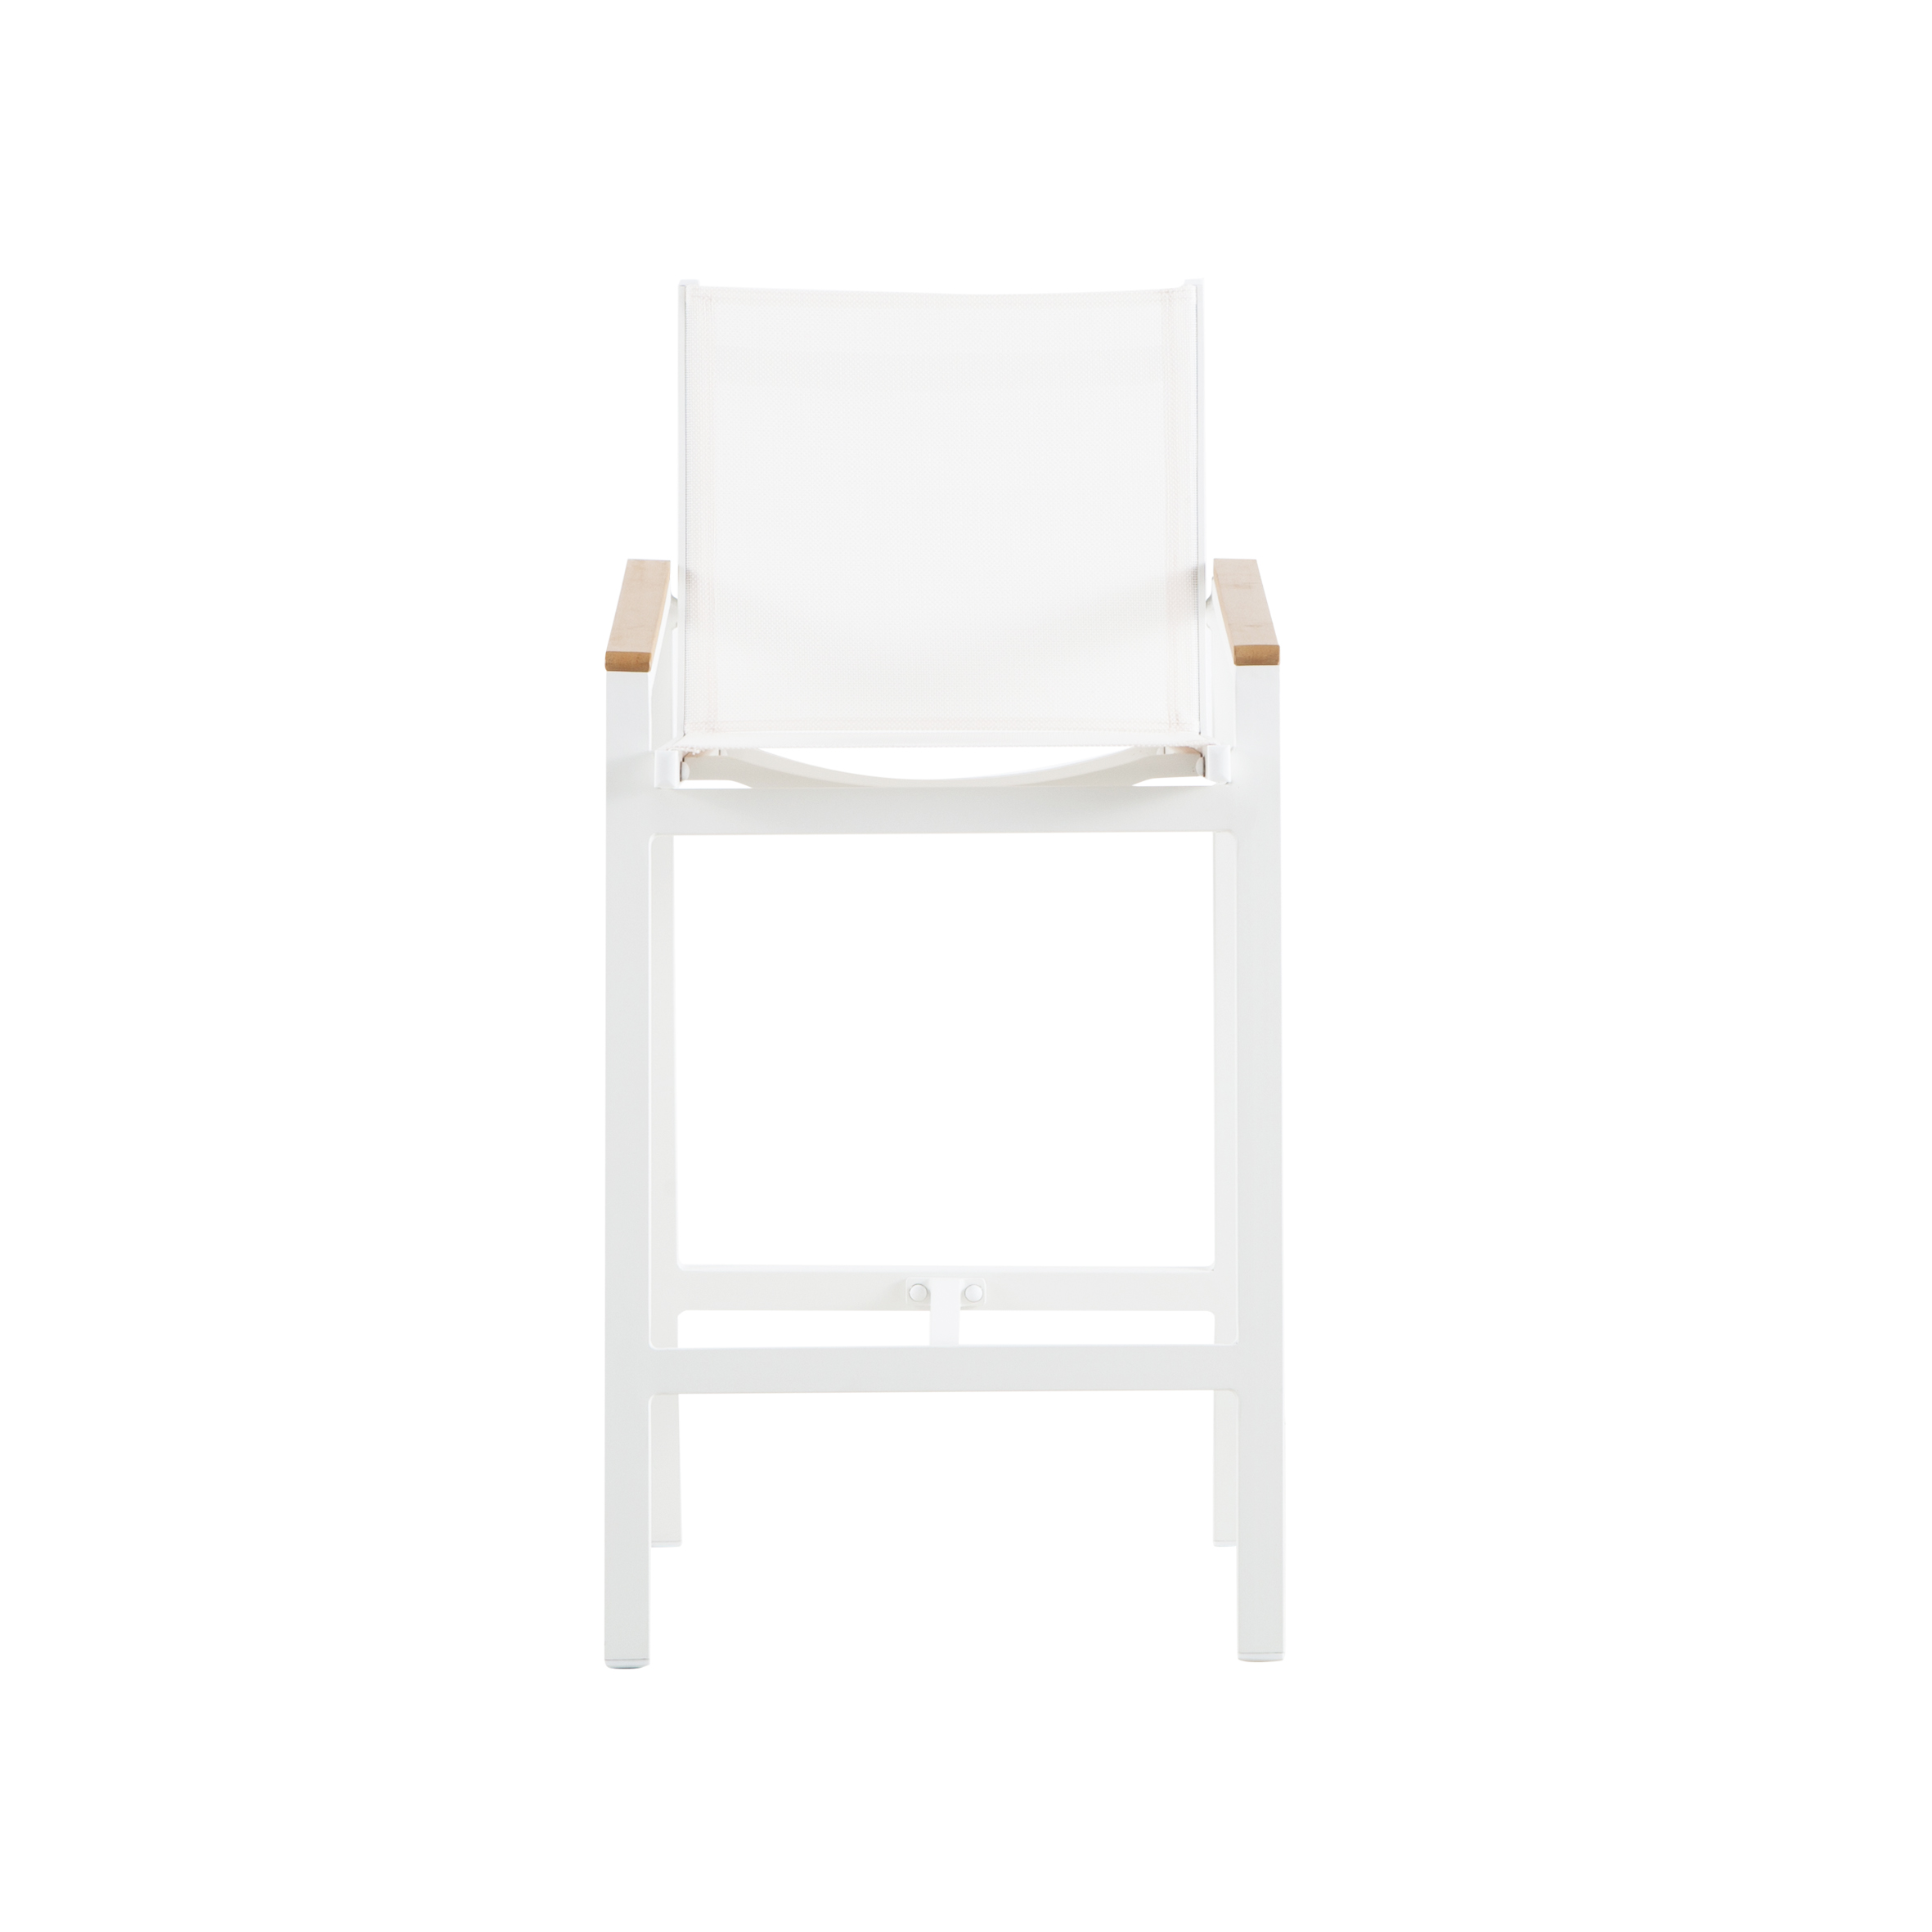 Snow white bar stool (poly wood) S2